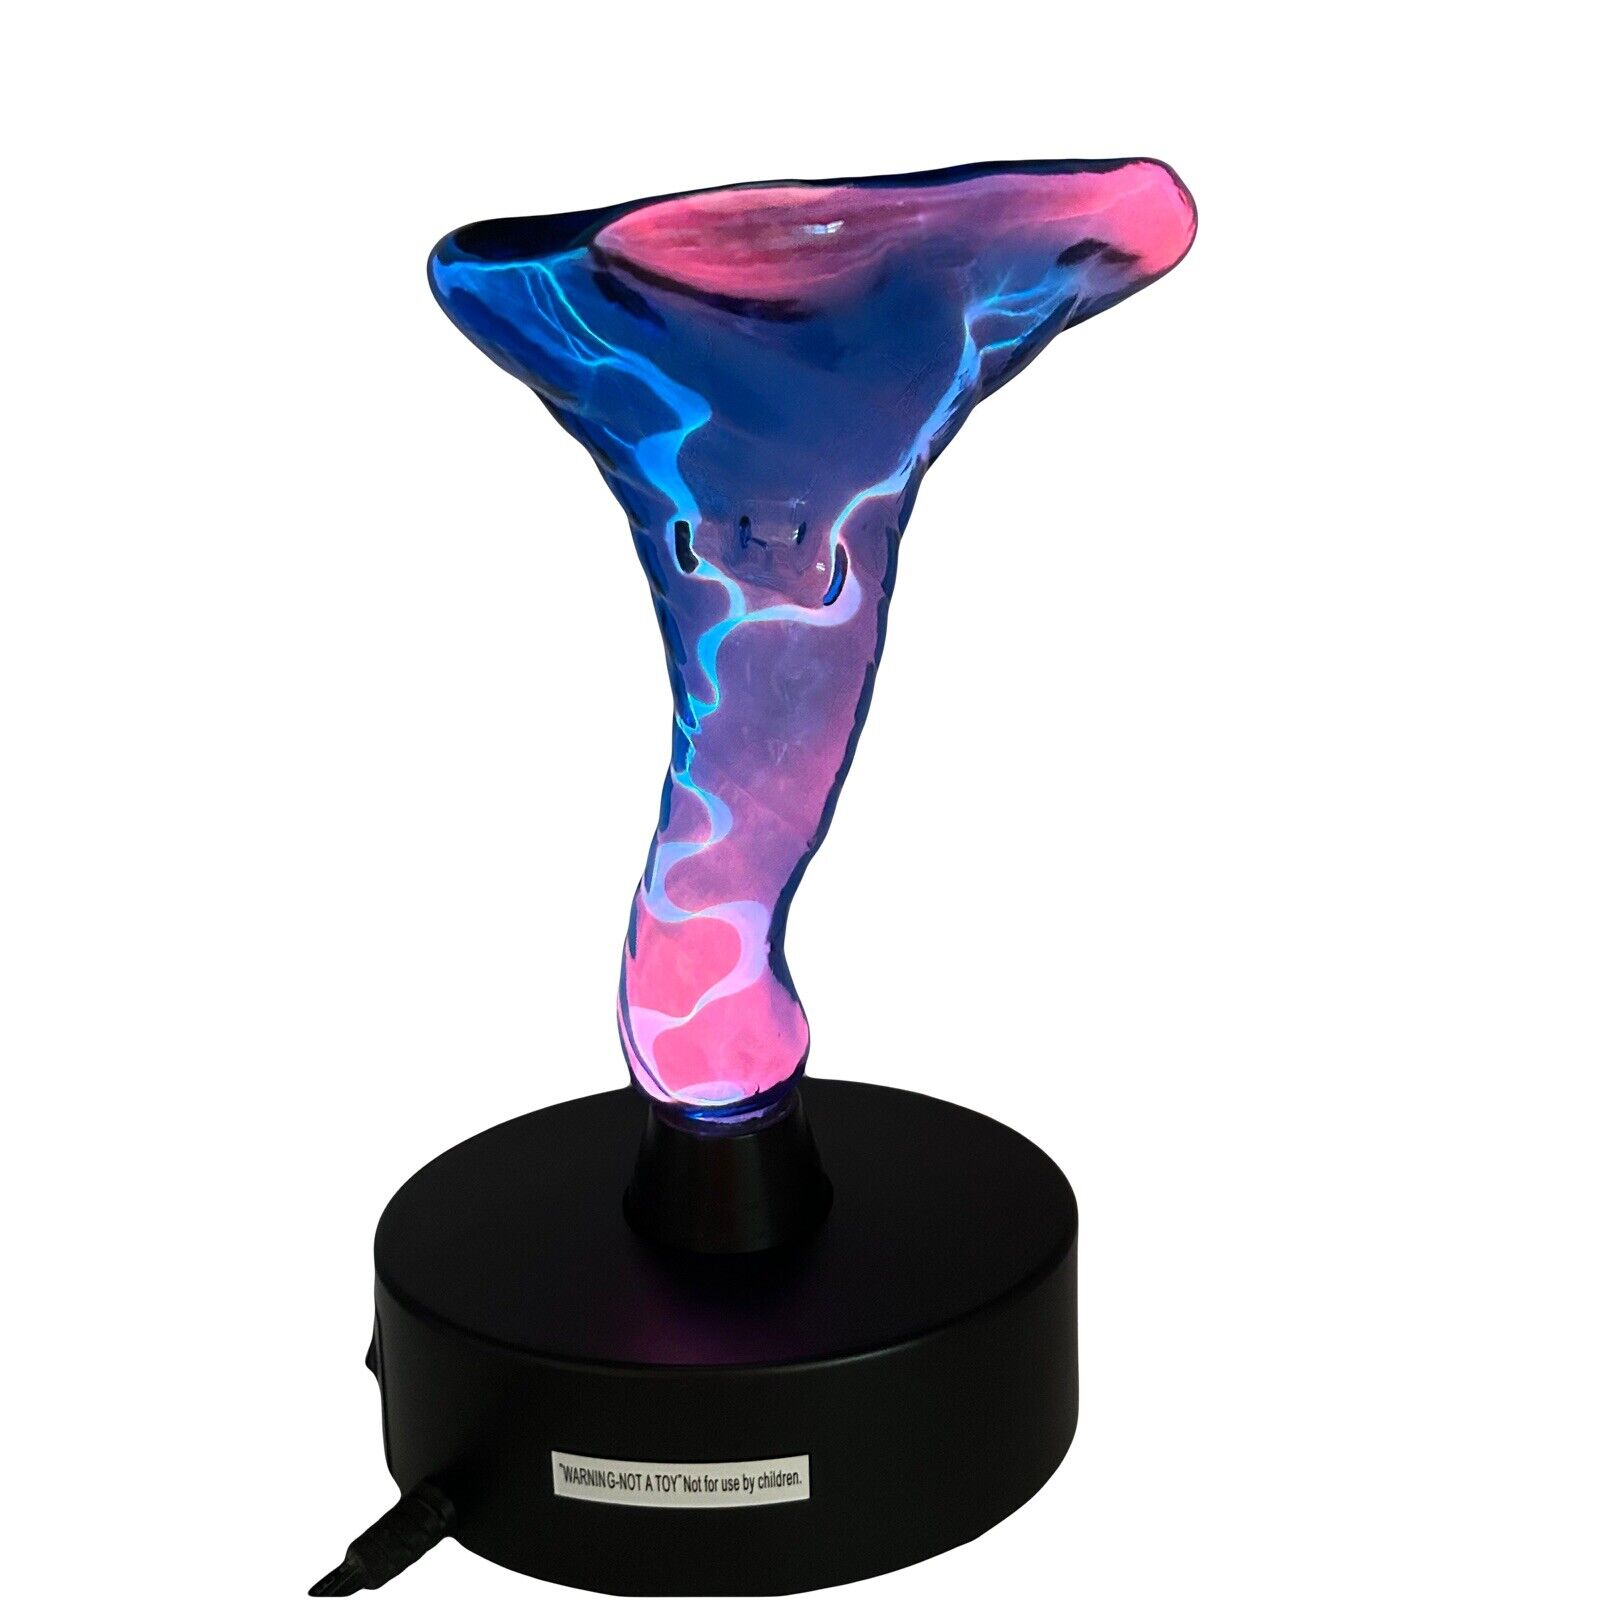 LumiSource Electra Tornado Sculpted Plasma Motion Art Lamp Blue 10.6”Tall